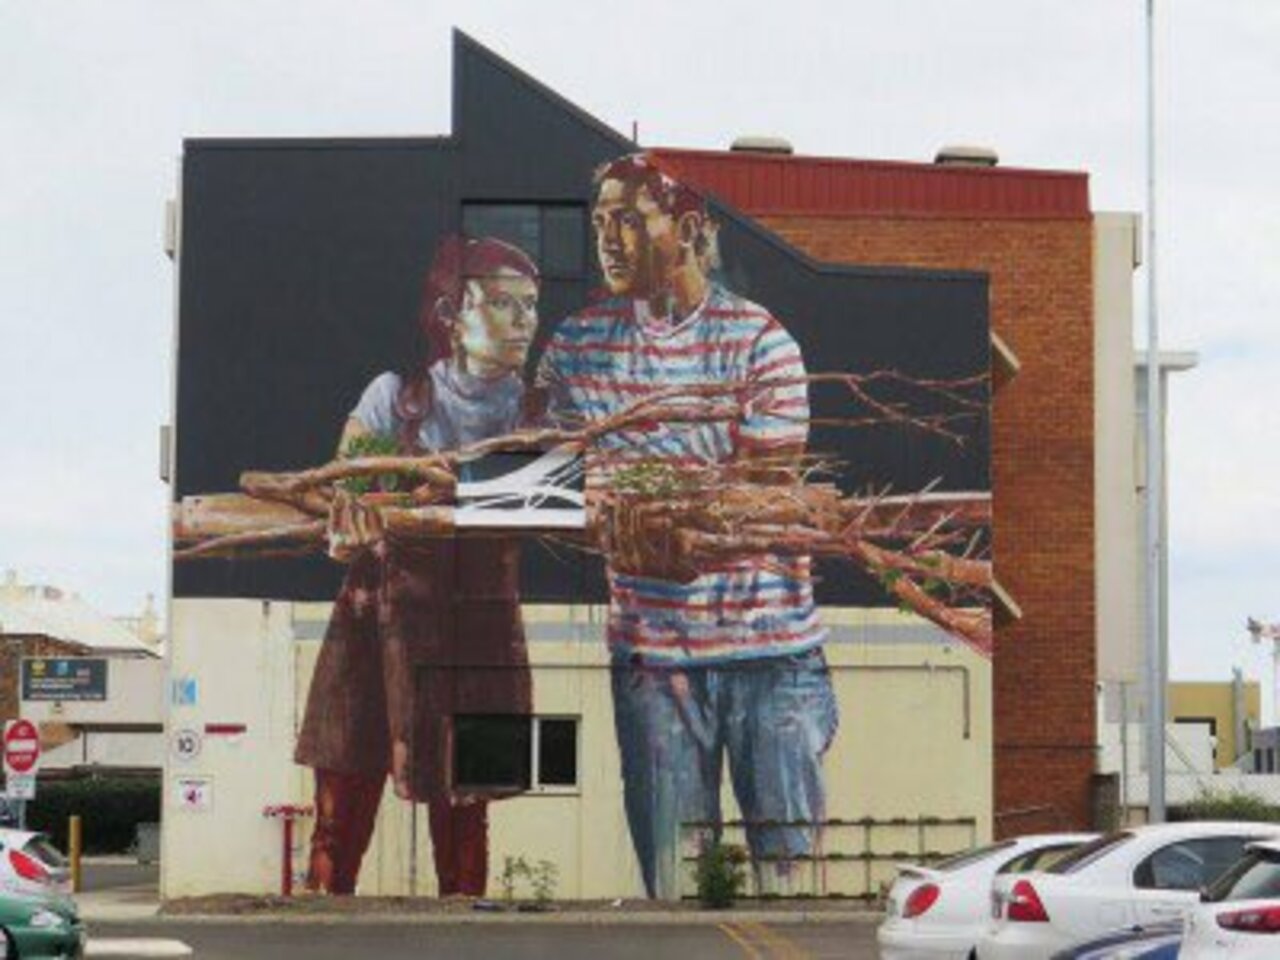 #Mural by Fintan Magee #Toowoomba #Australia #Streetart #graffiti #art https://t.co/kHKSh49R2L